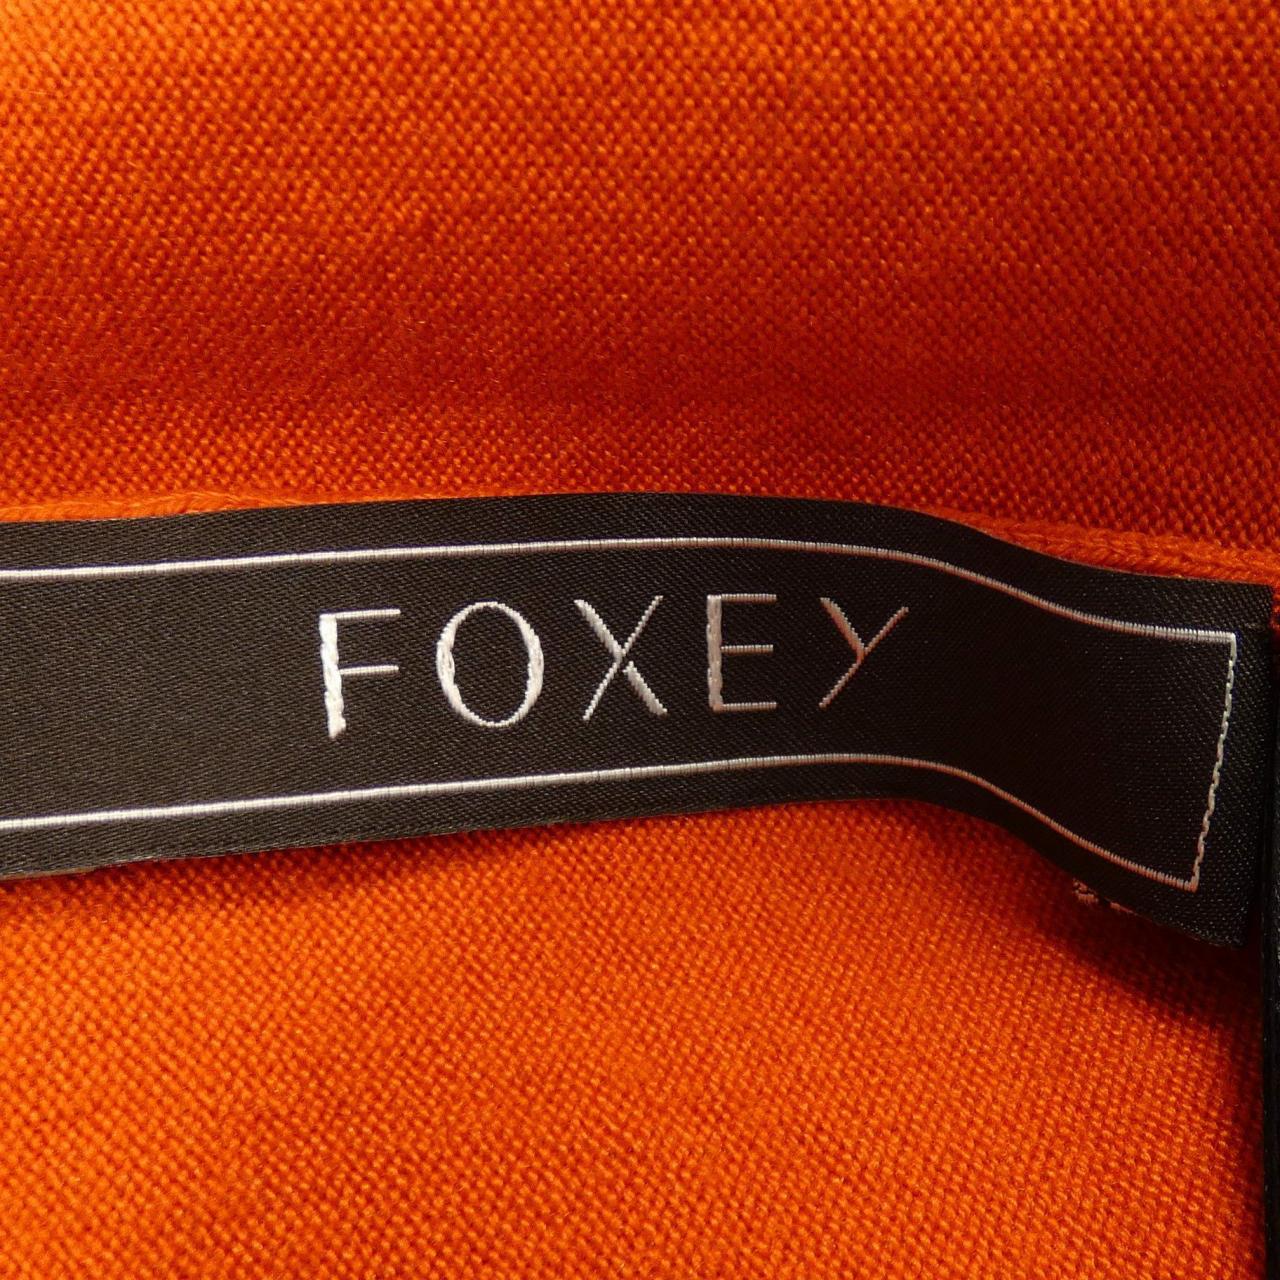 Foxy FOXEY PARKER